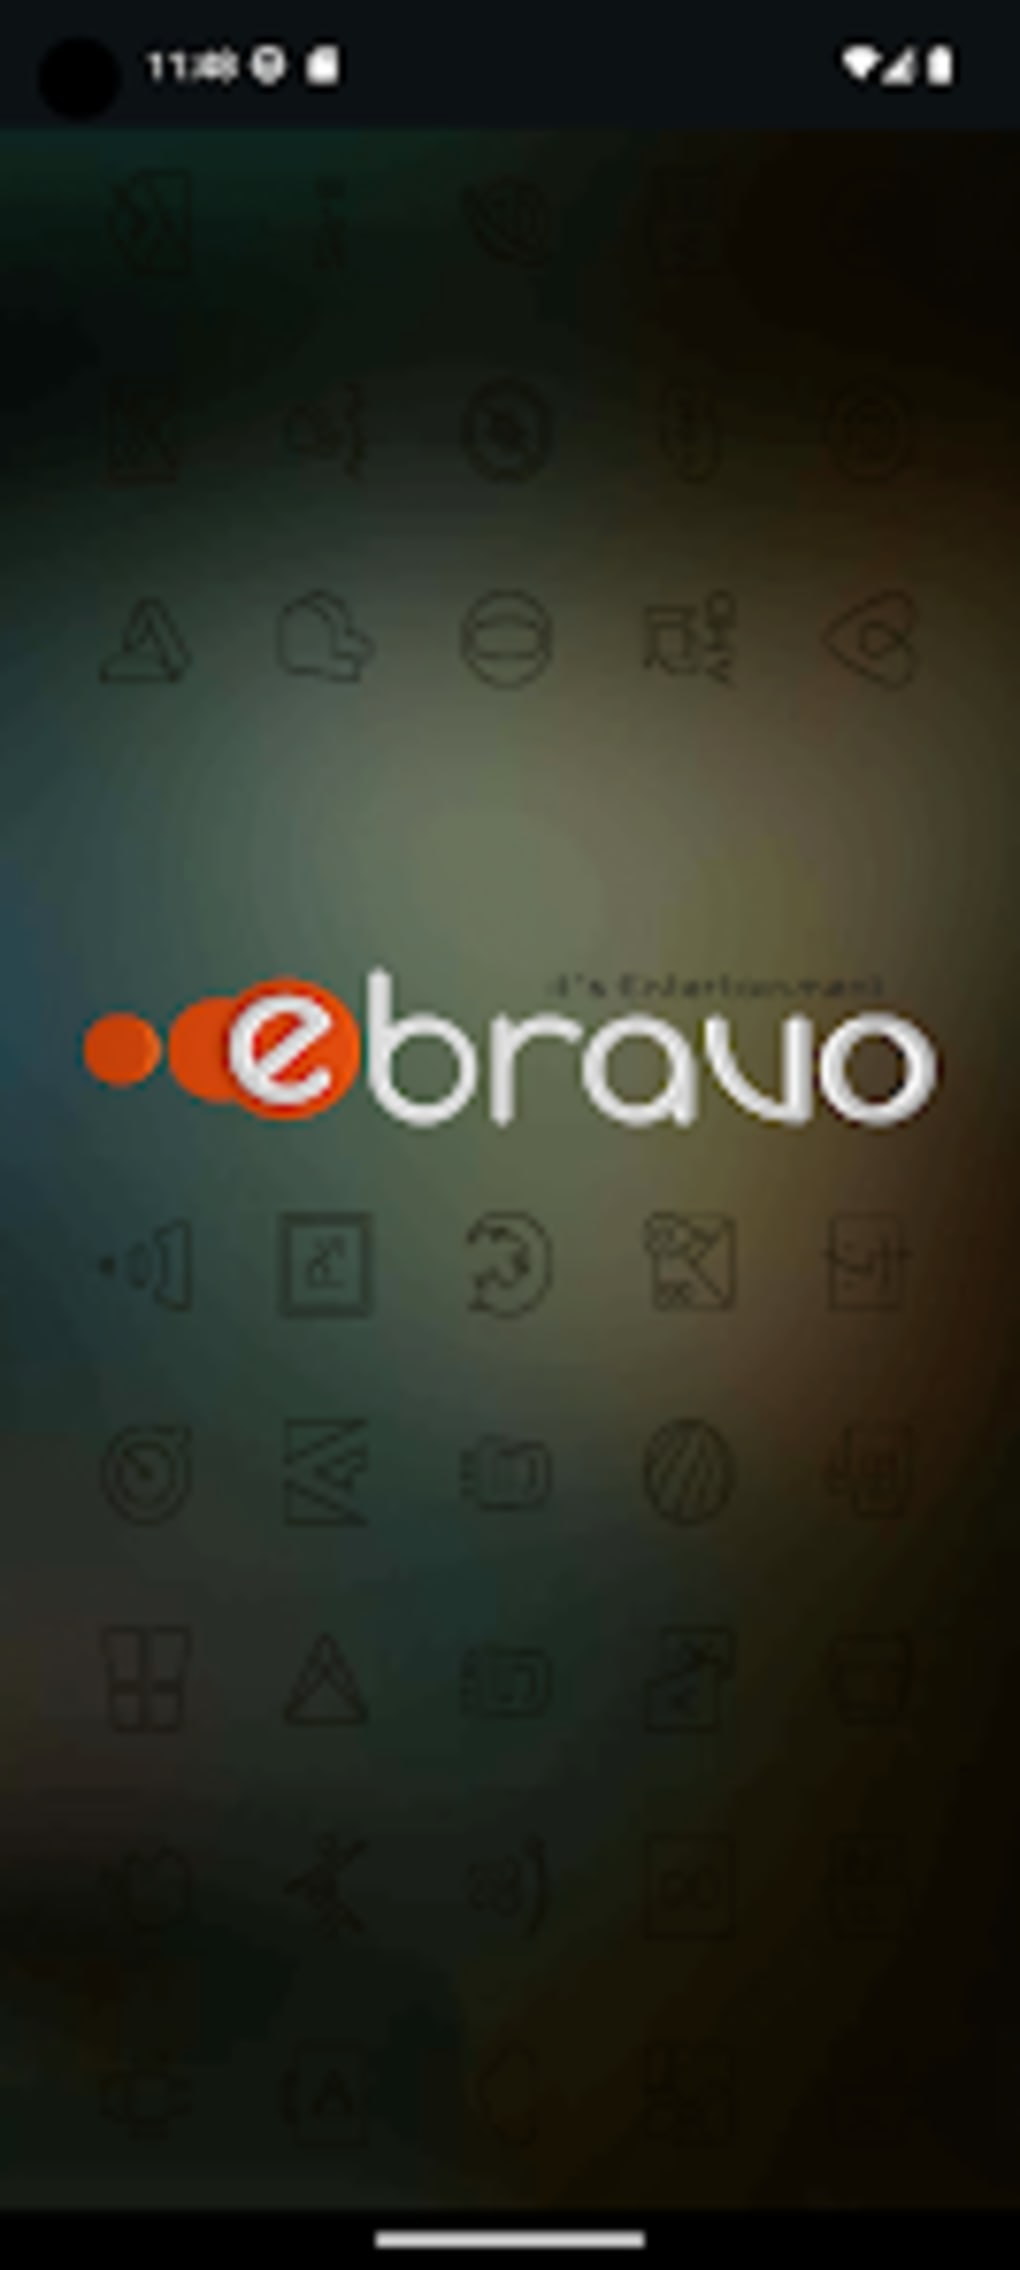 eBravo for Android